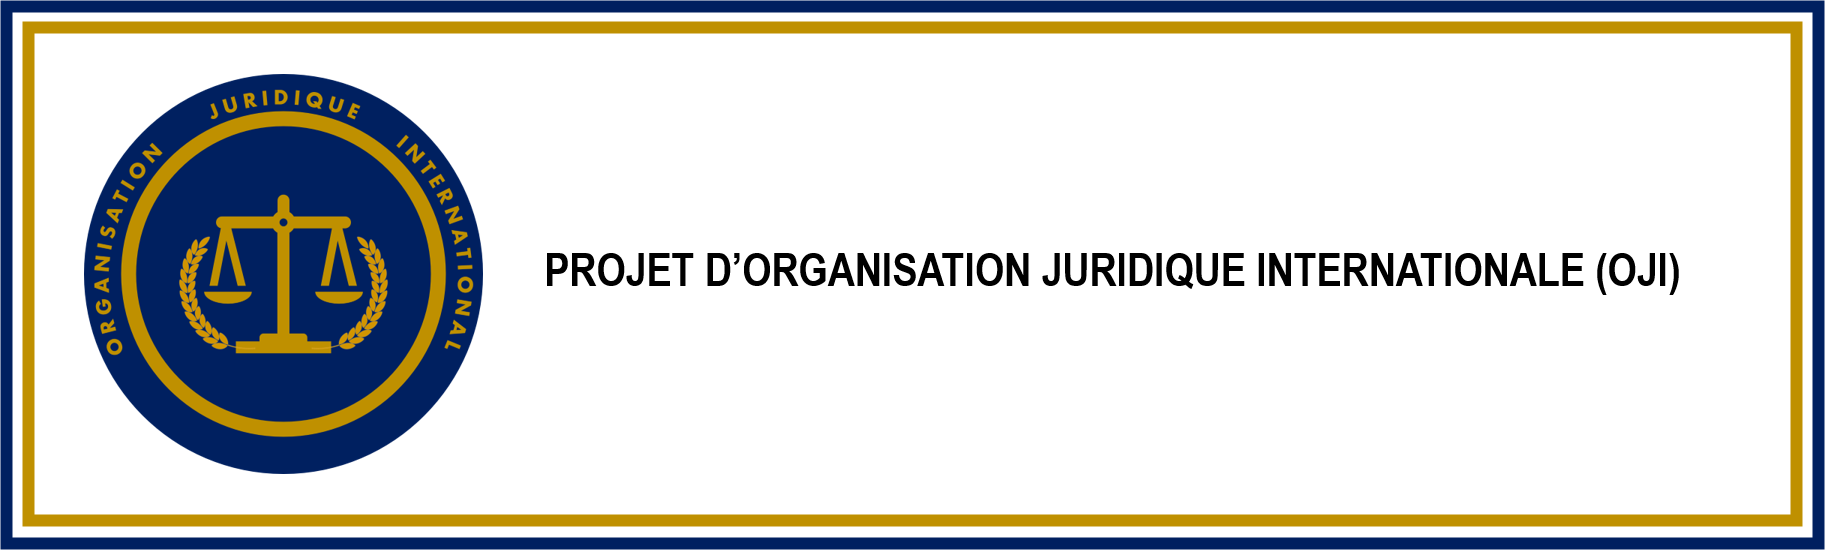 Organisation Juridique Internationale